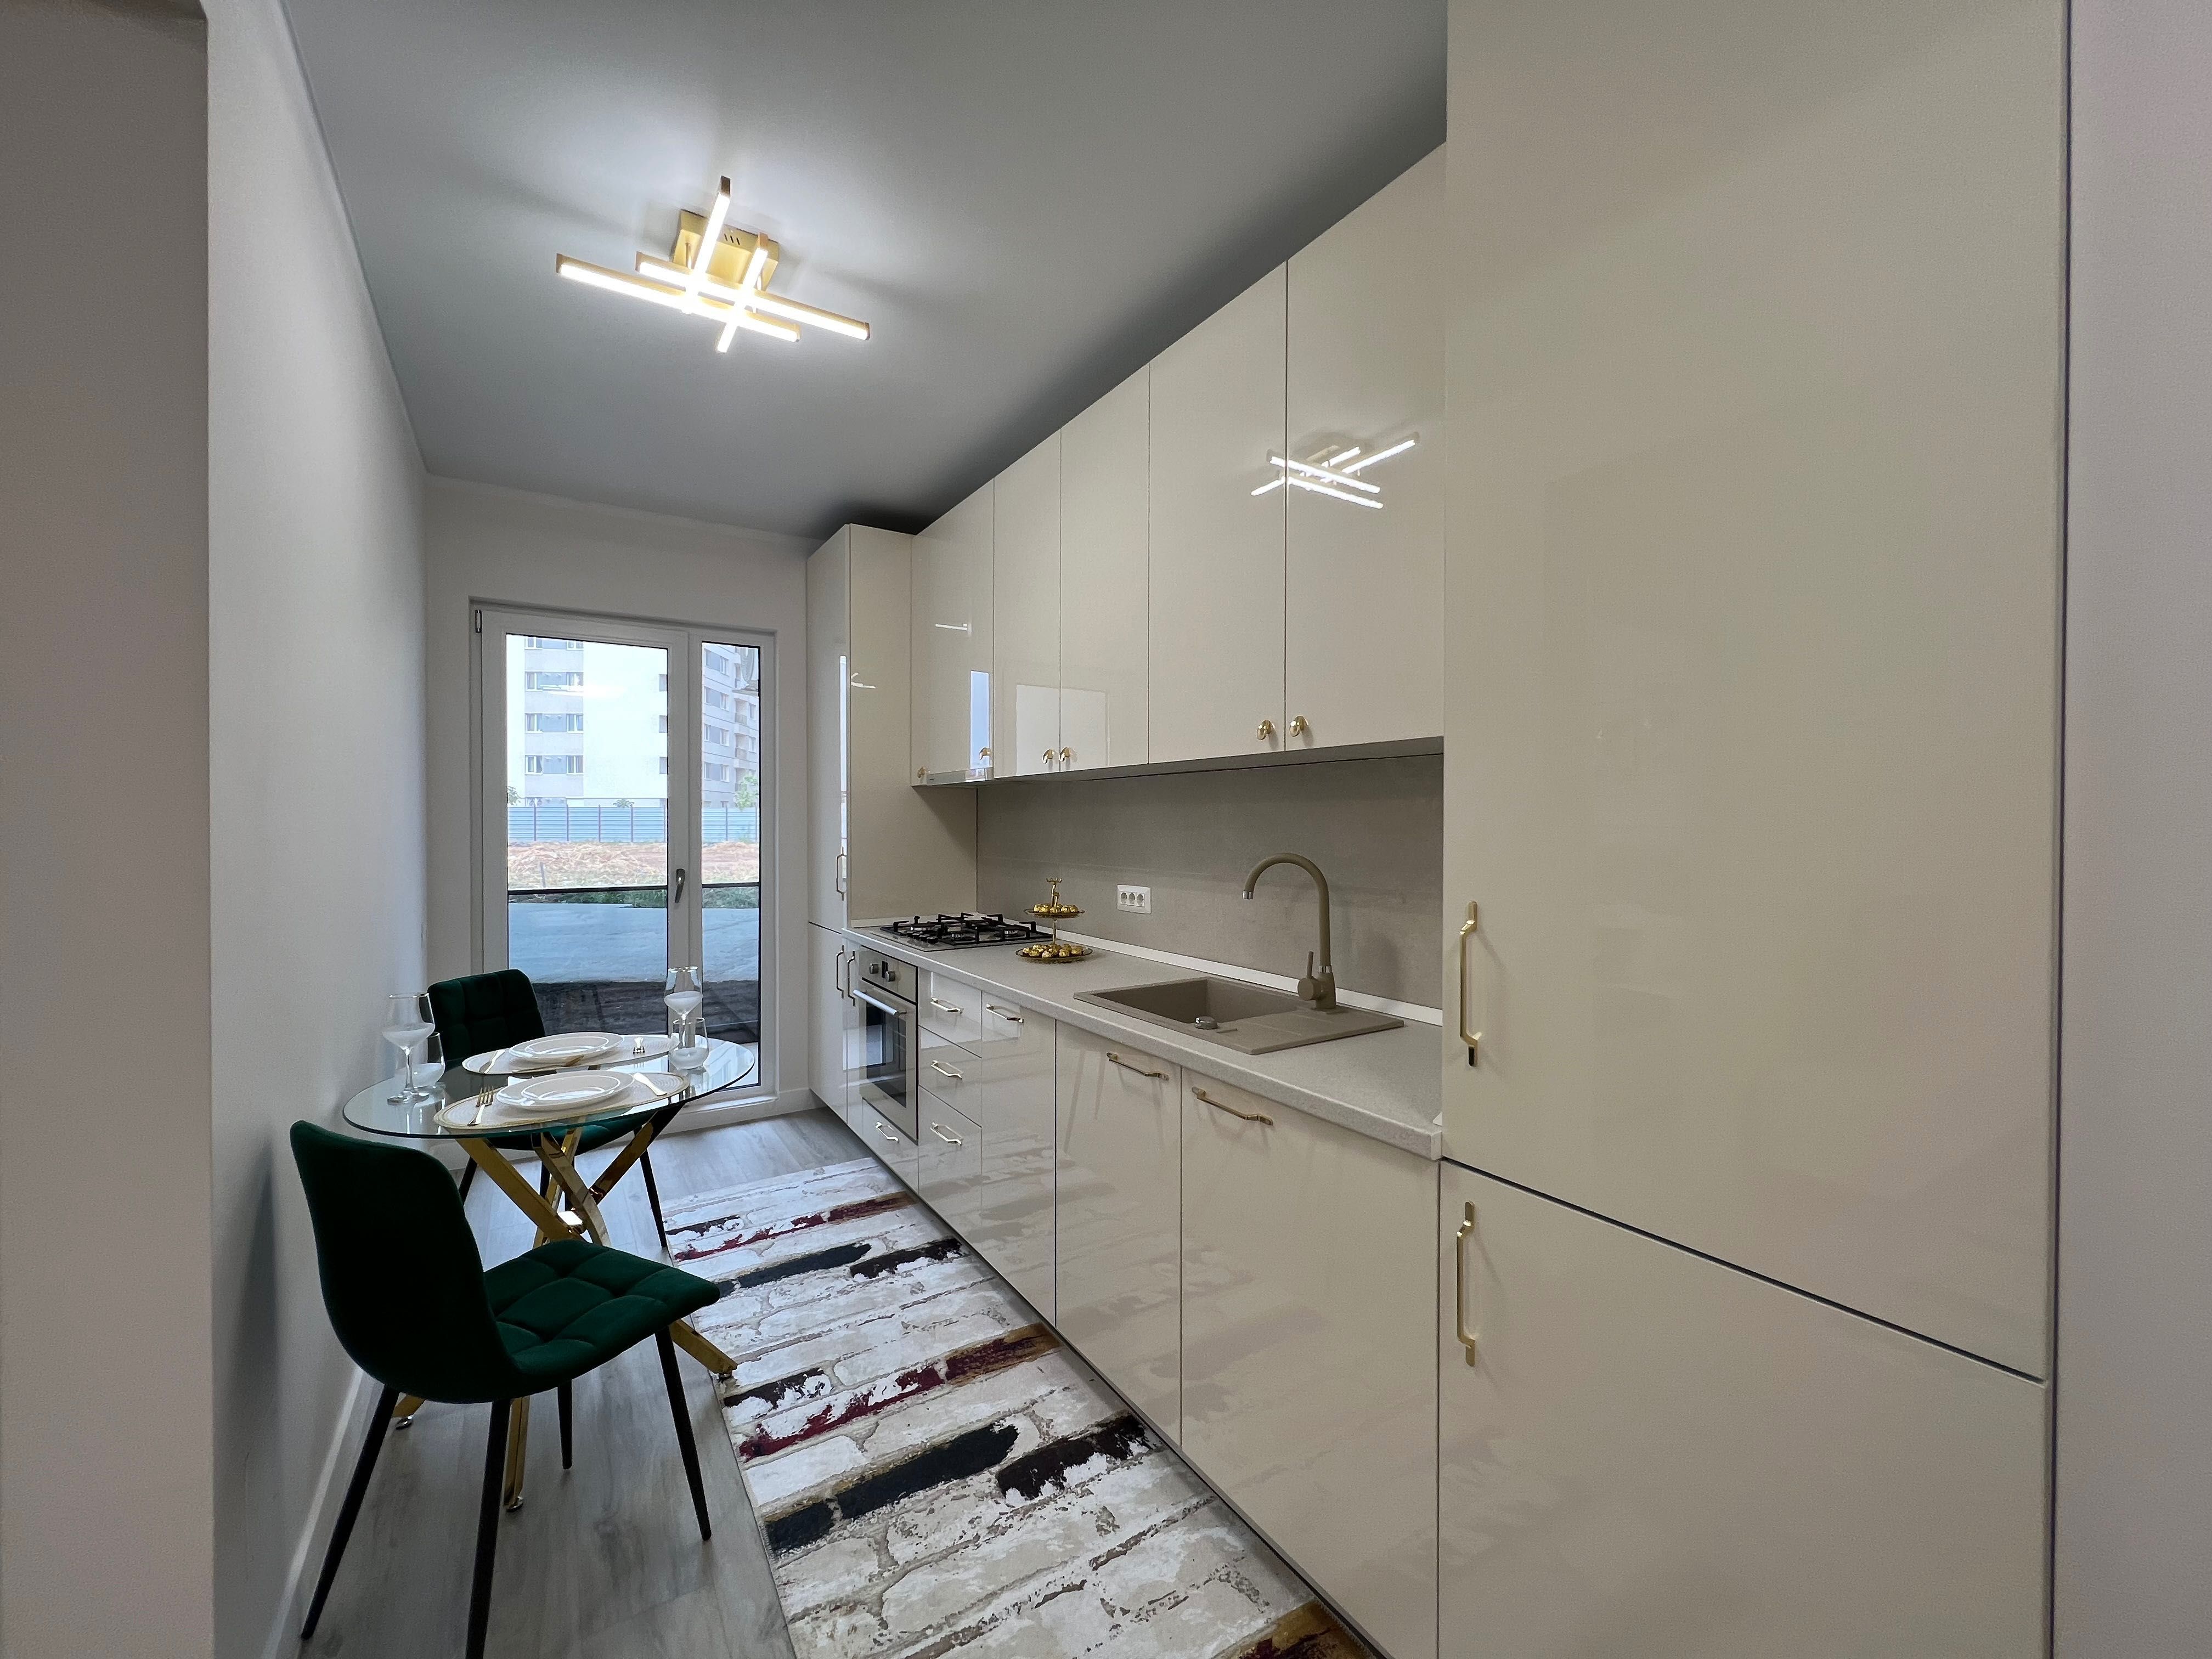 Pasarela Berceni, apartament tip studio, disponibil etaj intermediar